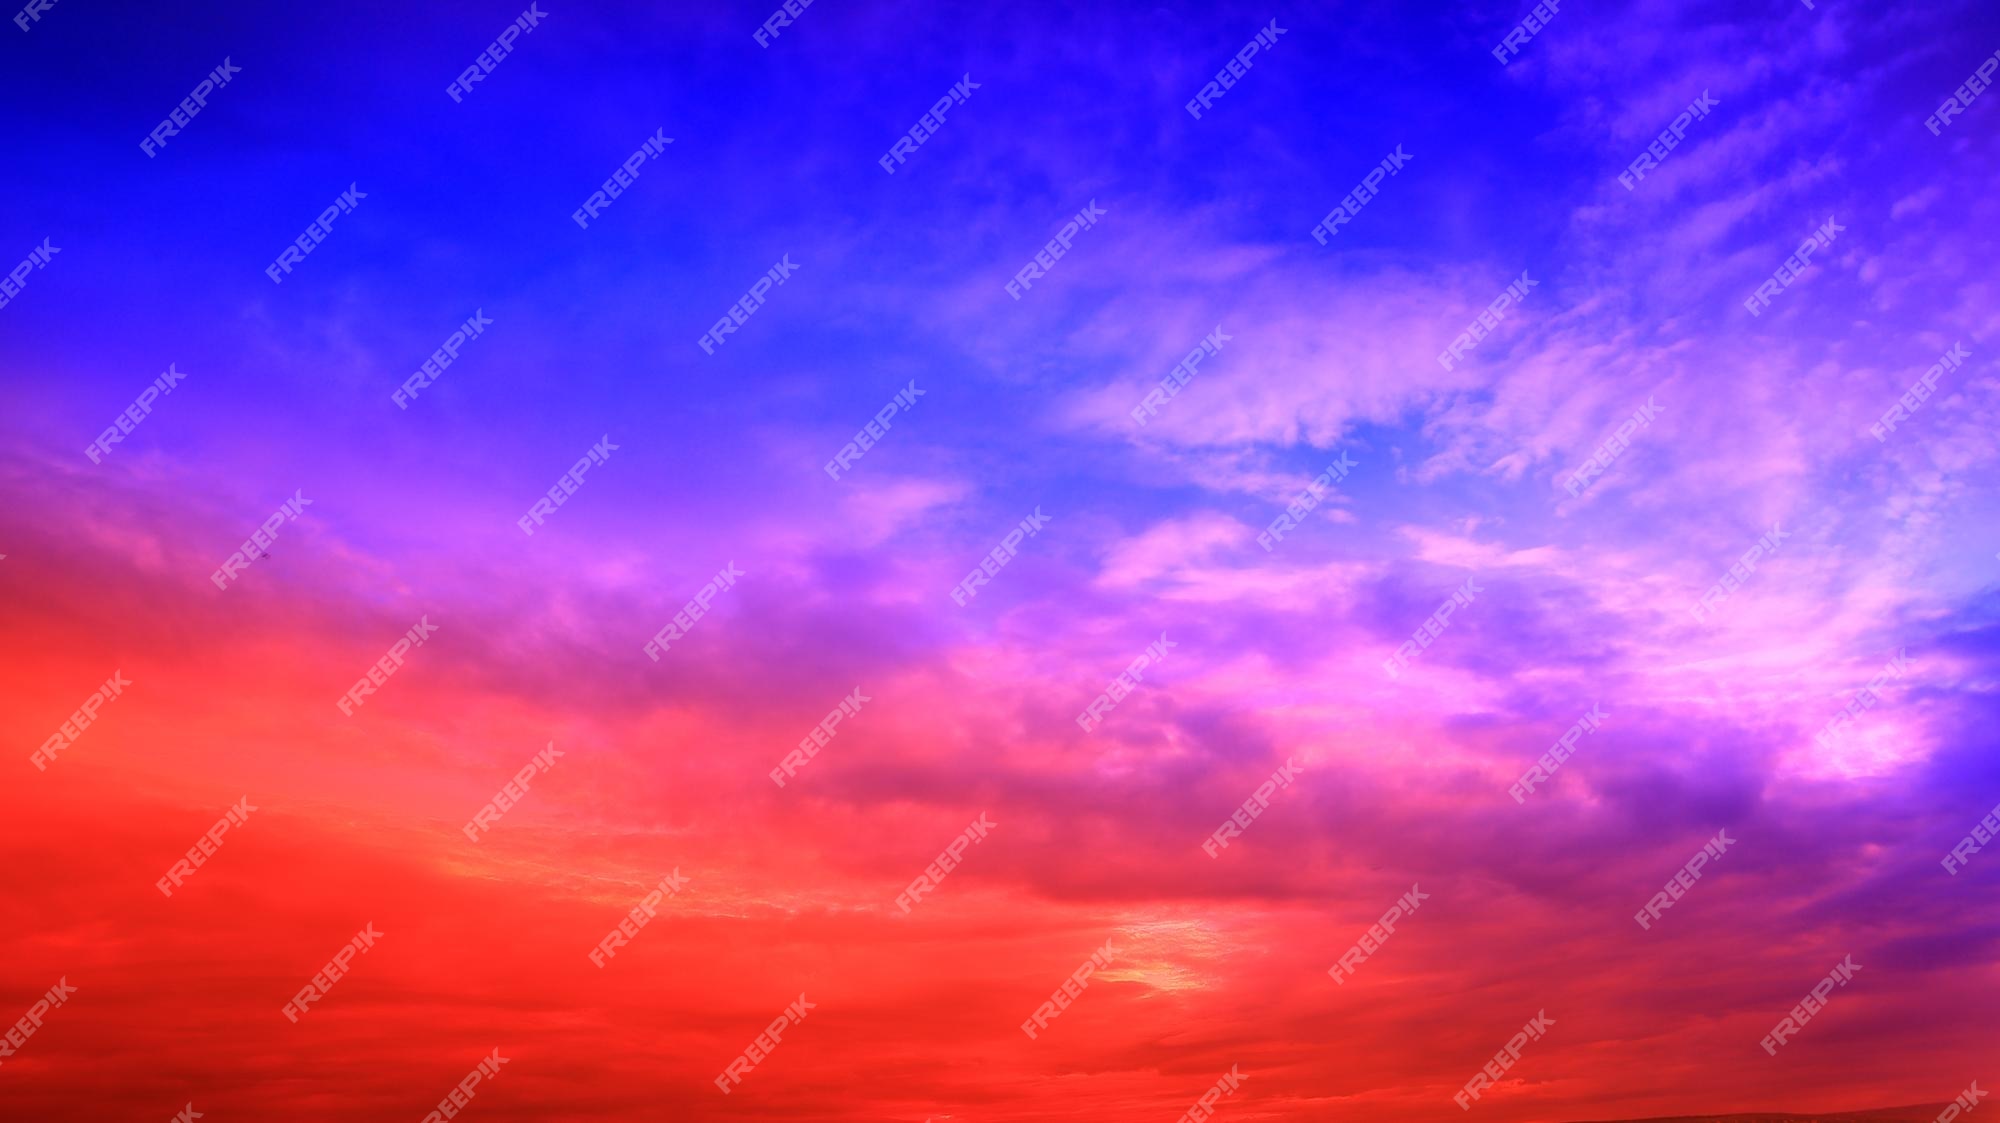 Premium Photo | Vivid multi colored wallpaper blue bright and orange yellow  dramatic sunrise or sunset sky and cloud